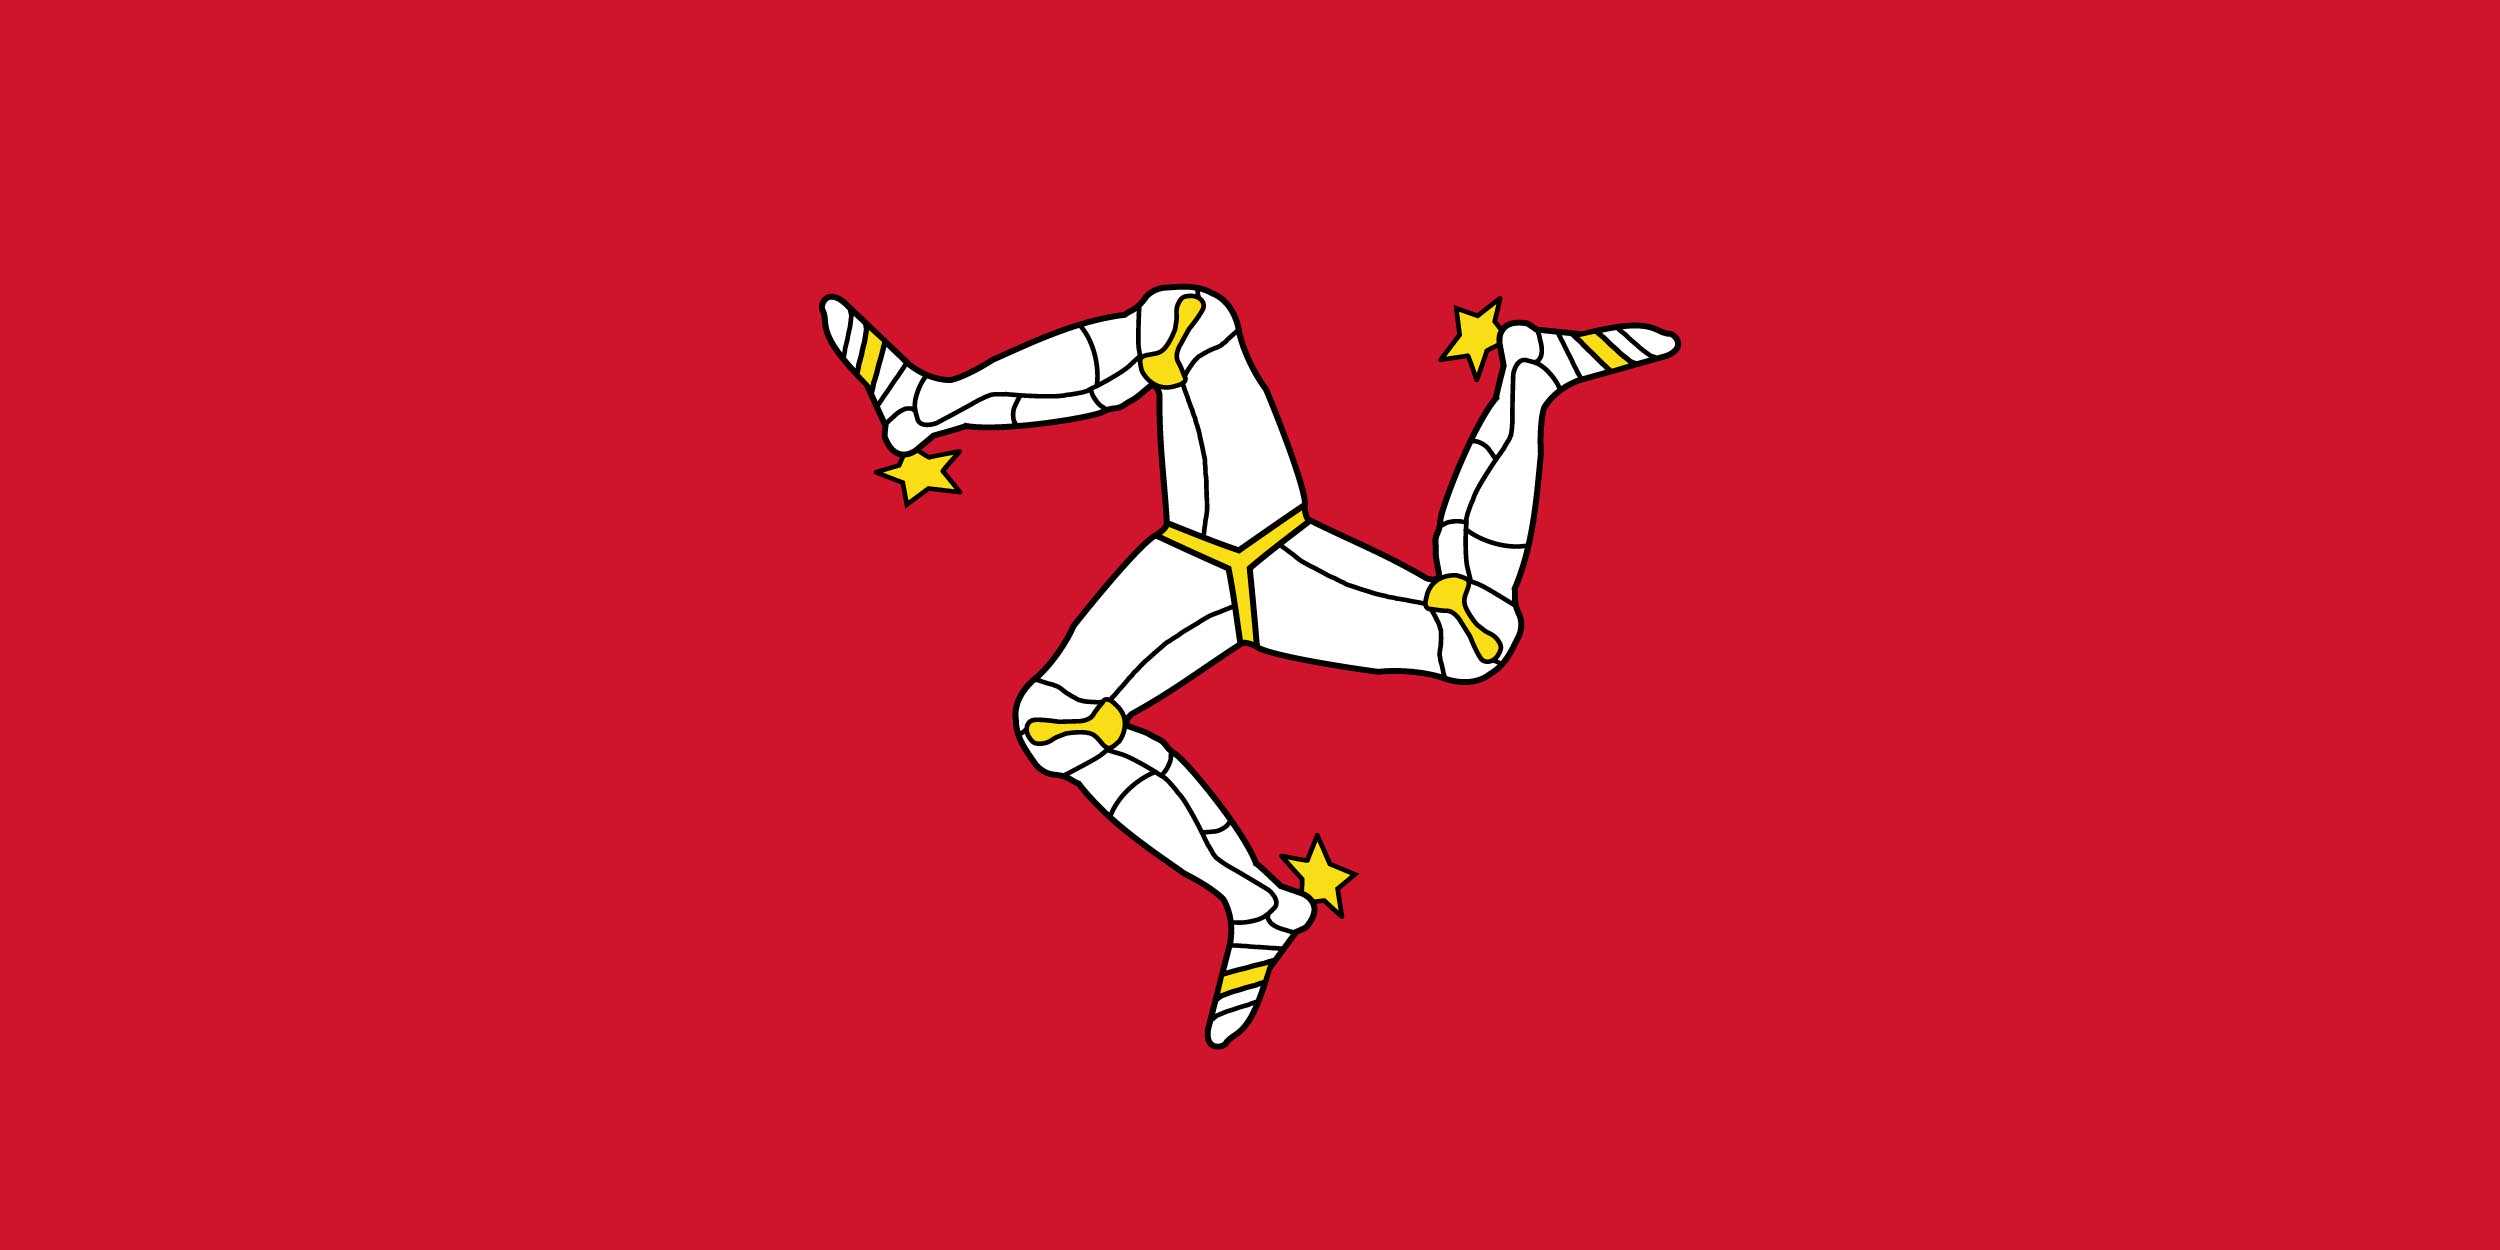 Isle of Man Escort flying the flag of the Isle of Man. 